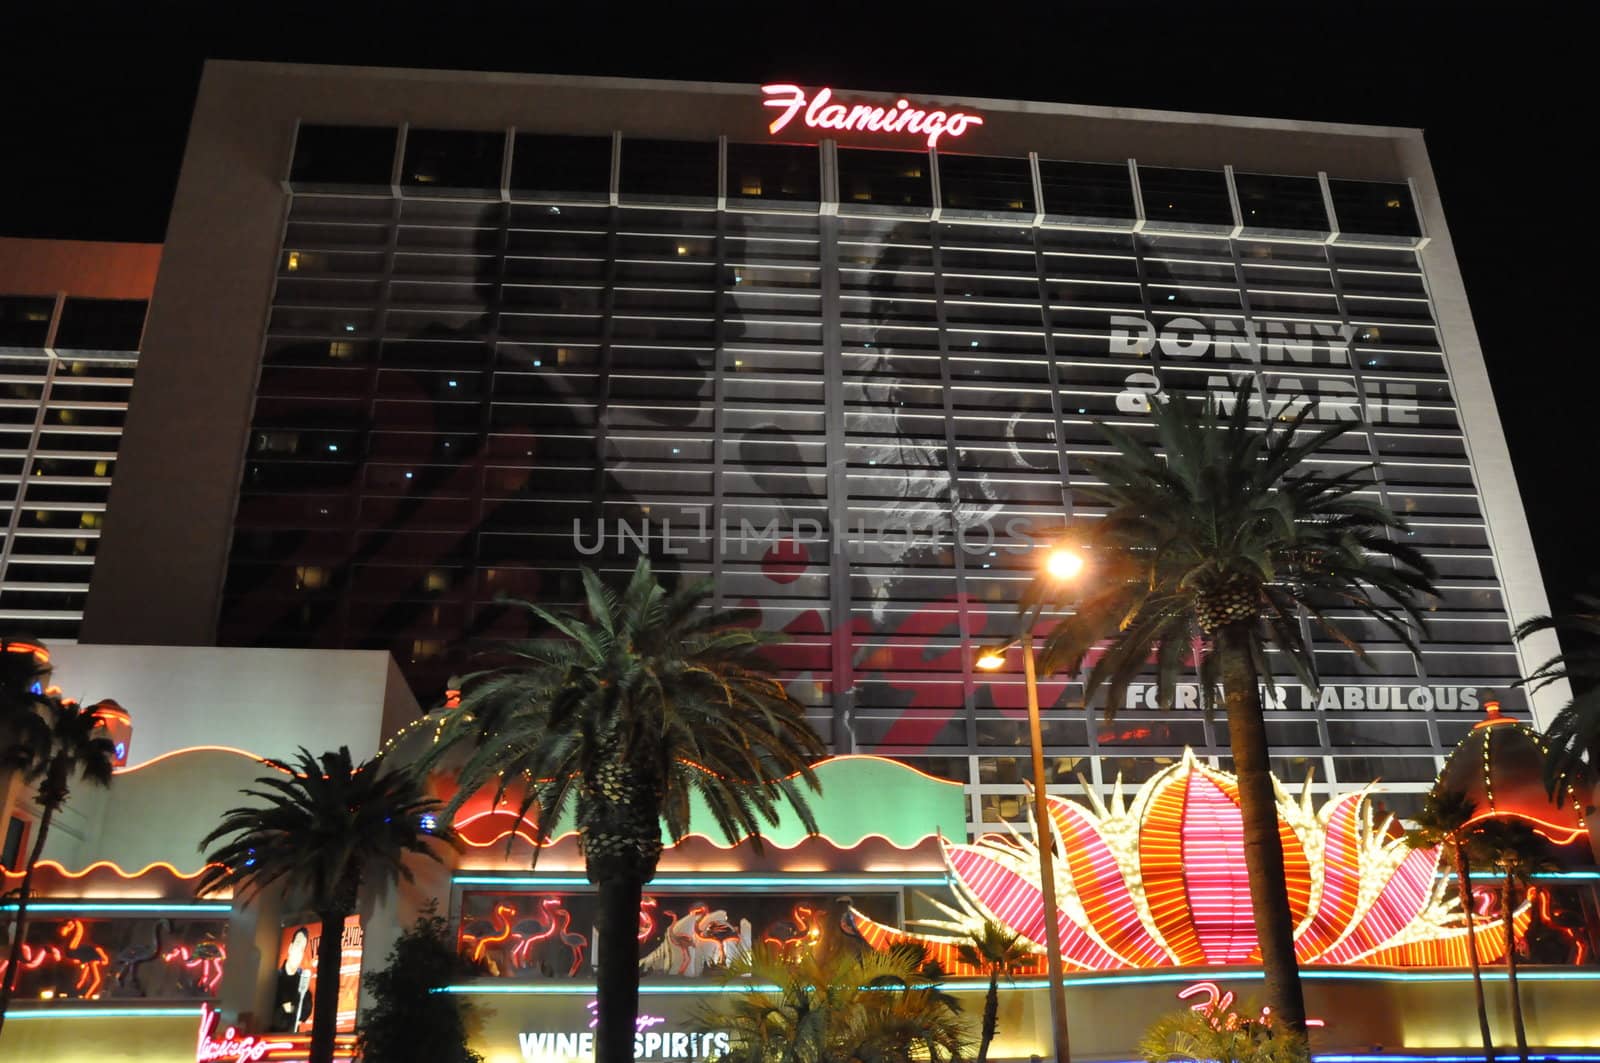 Flamingo Hotel and Casino in Las Vegas by sainaniritu